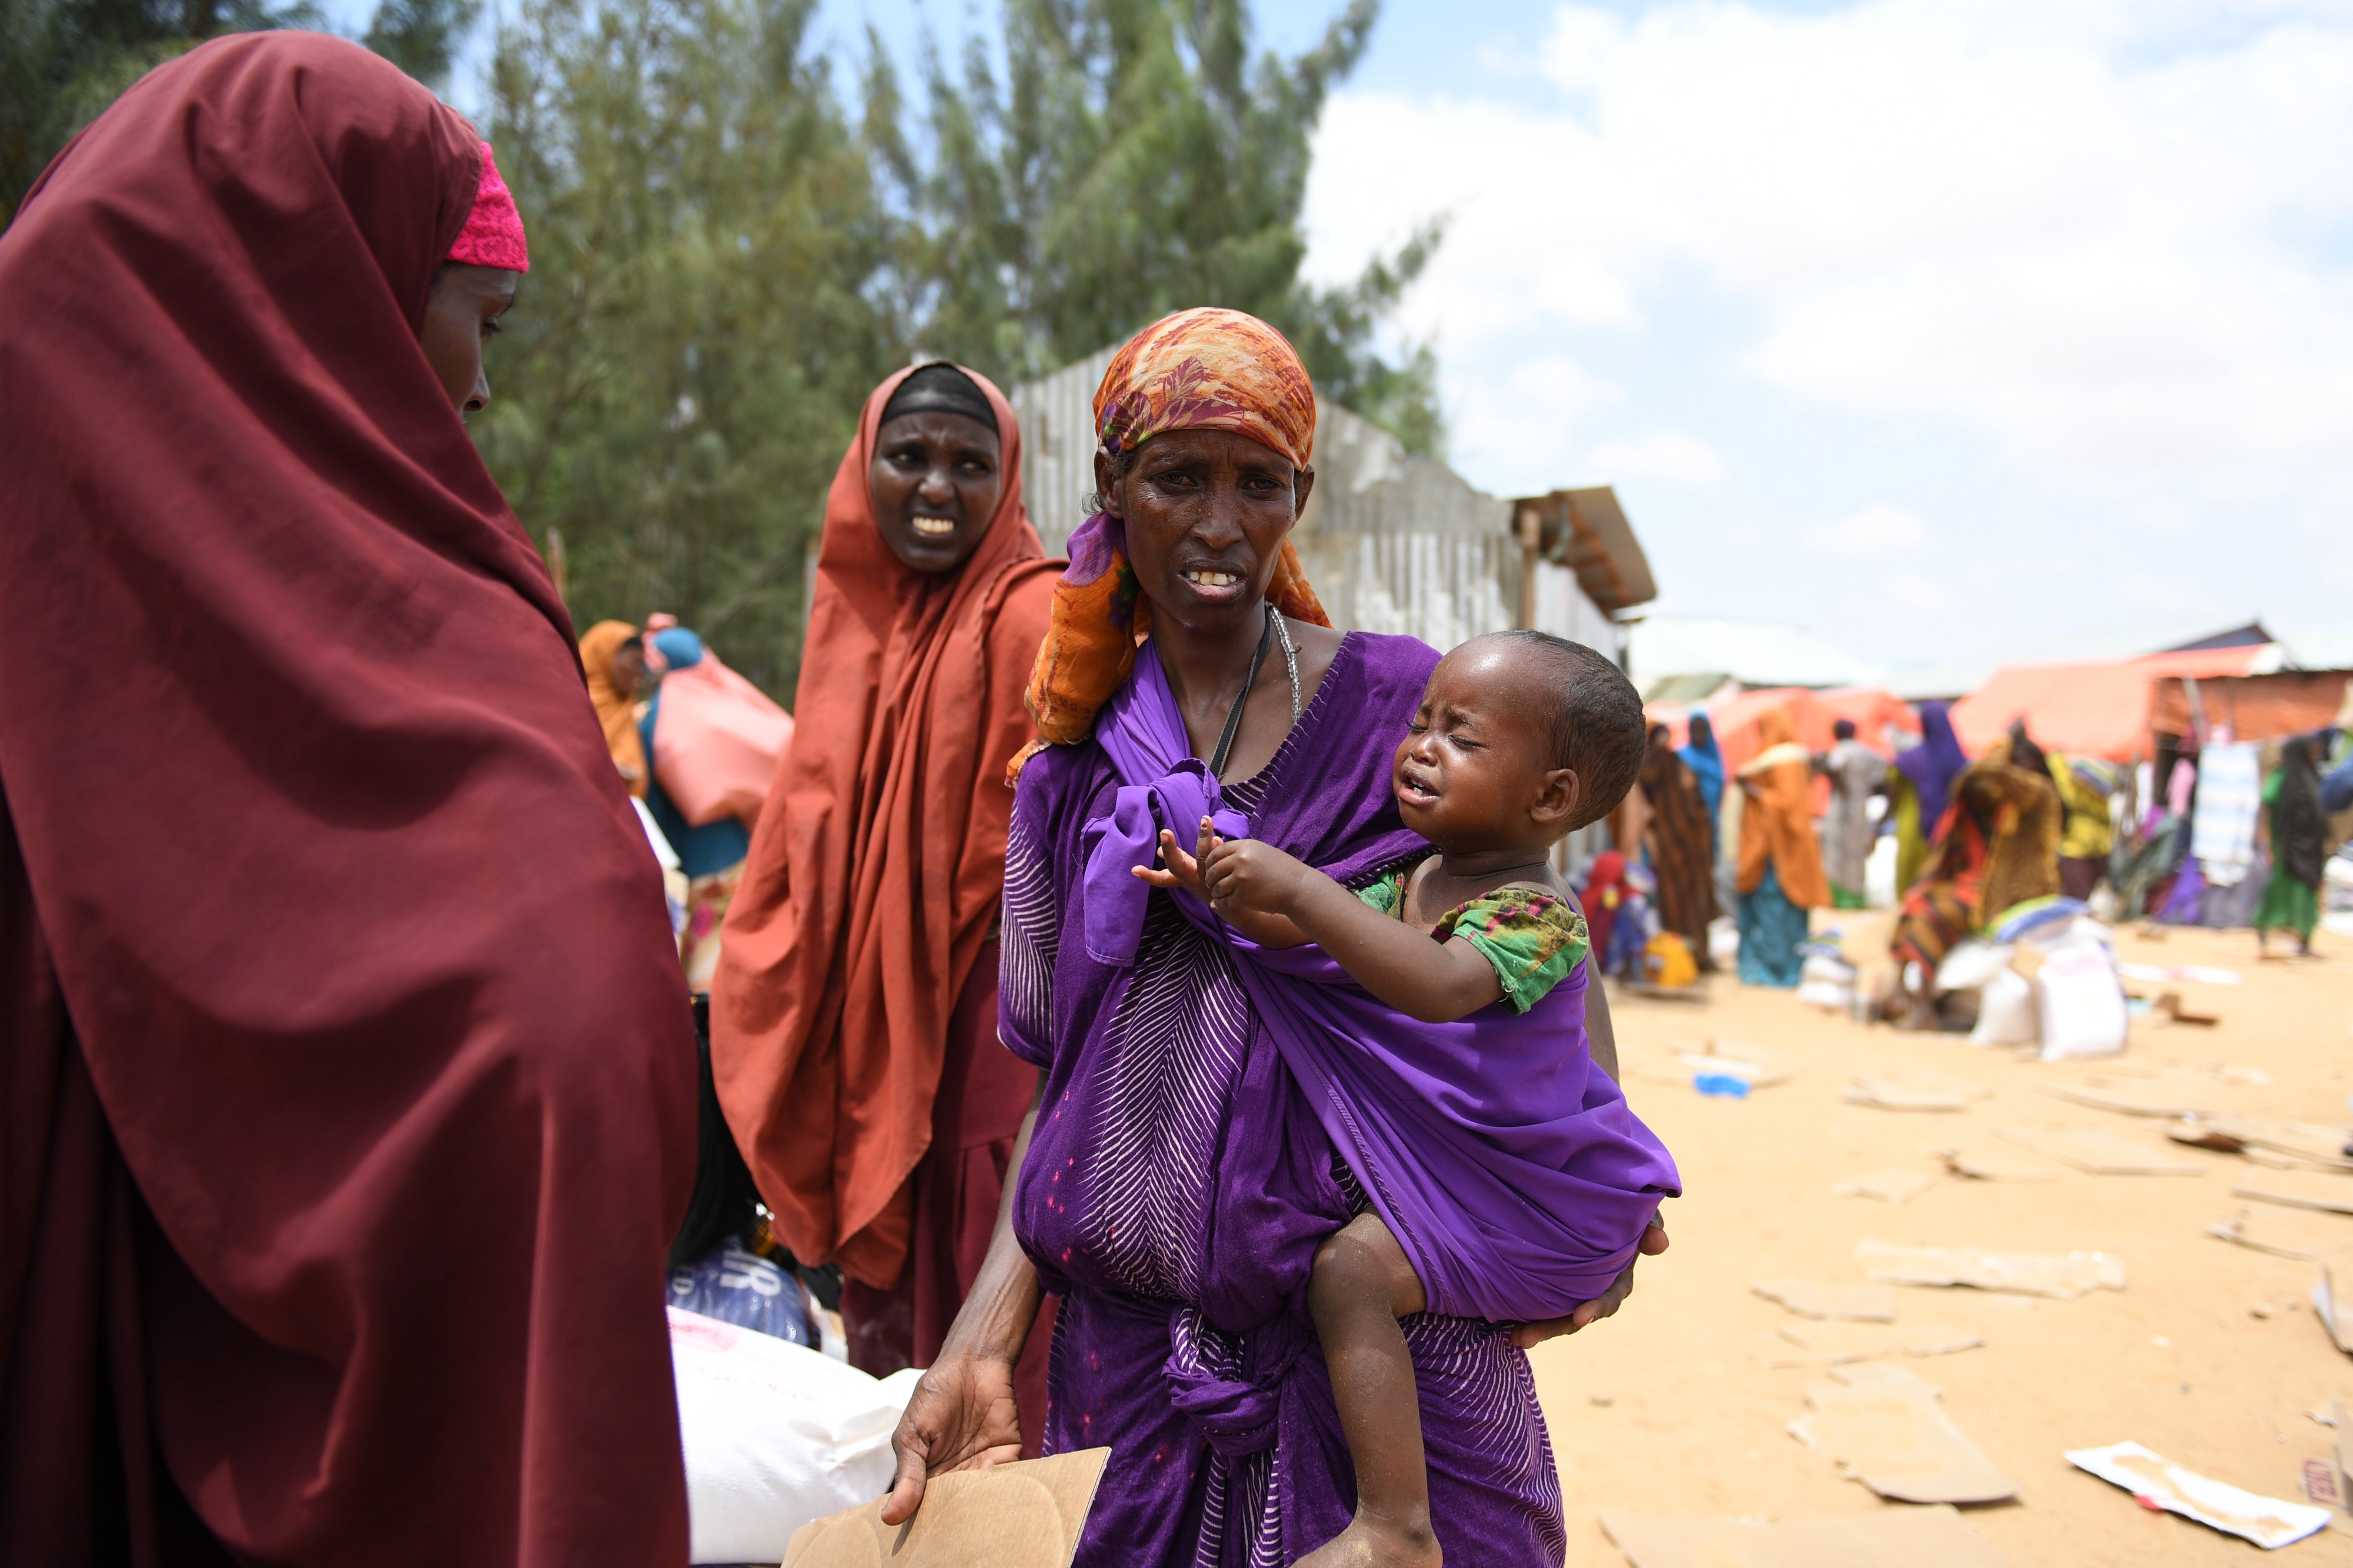 Deteriorating situation in Somalia has international community worried